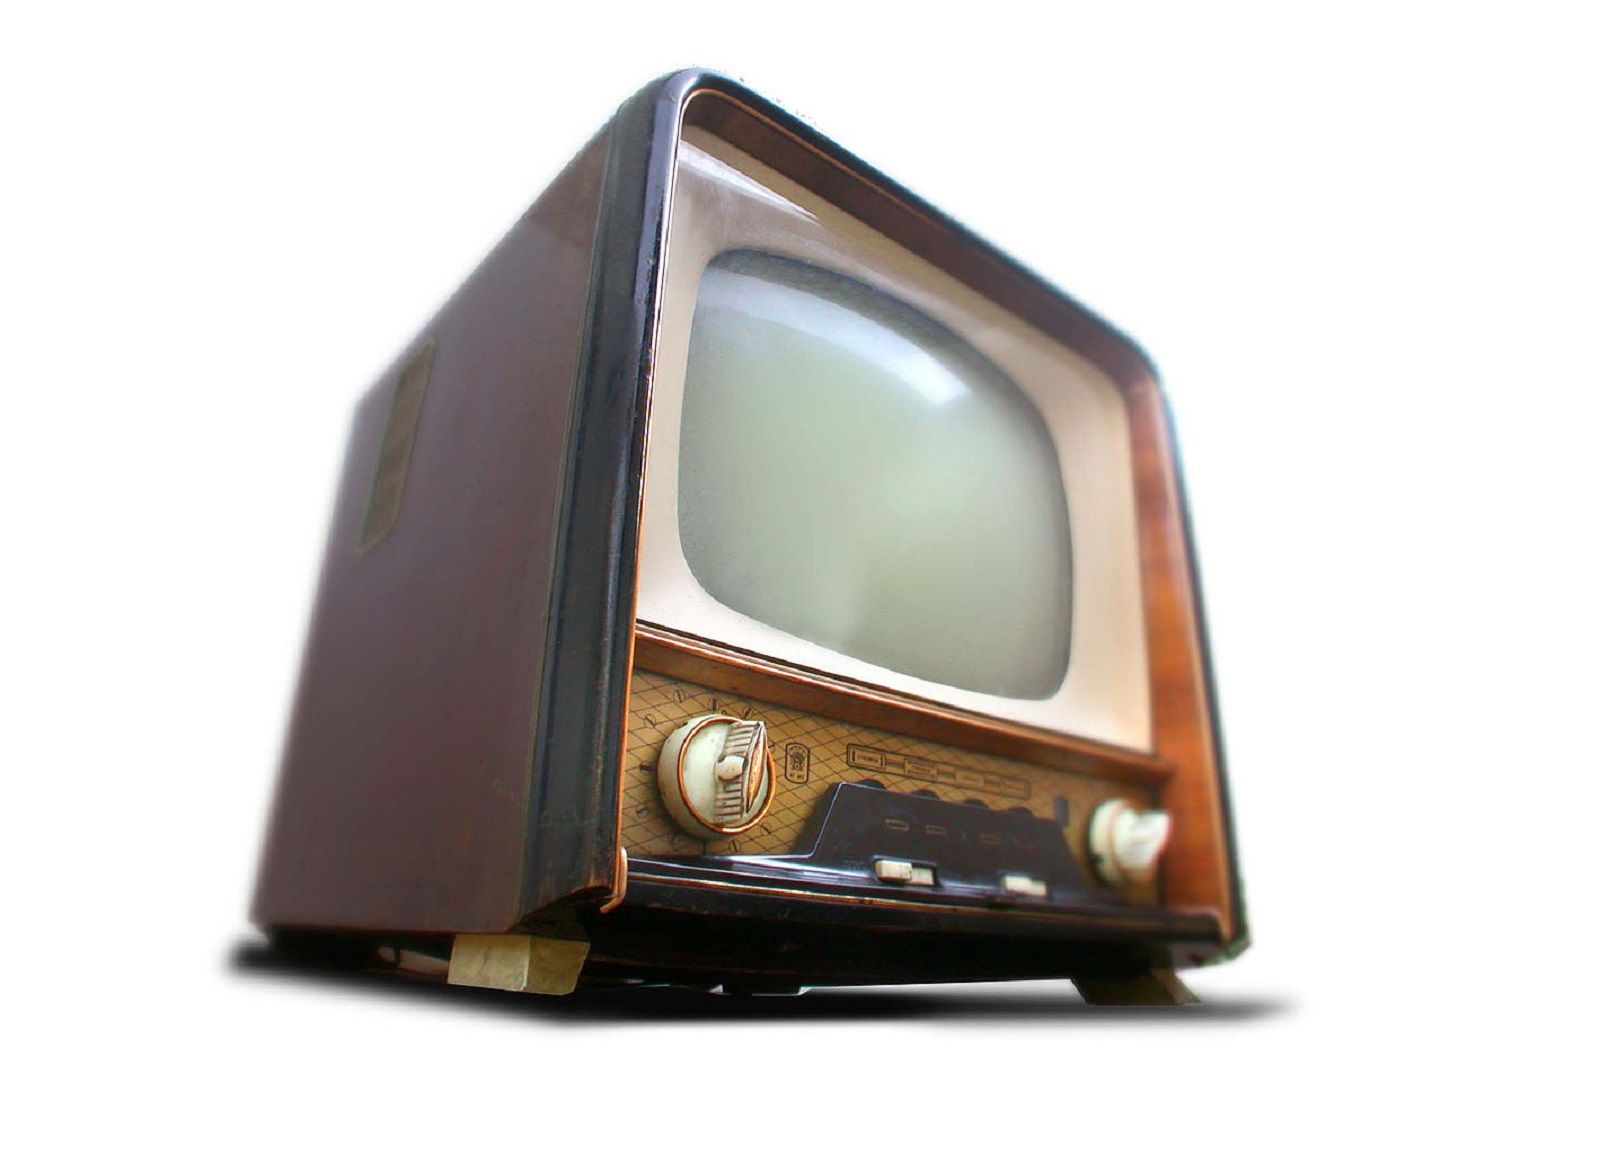 Cathode ray tube televisions